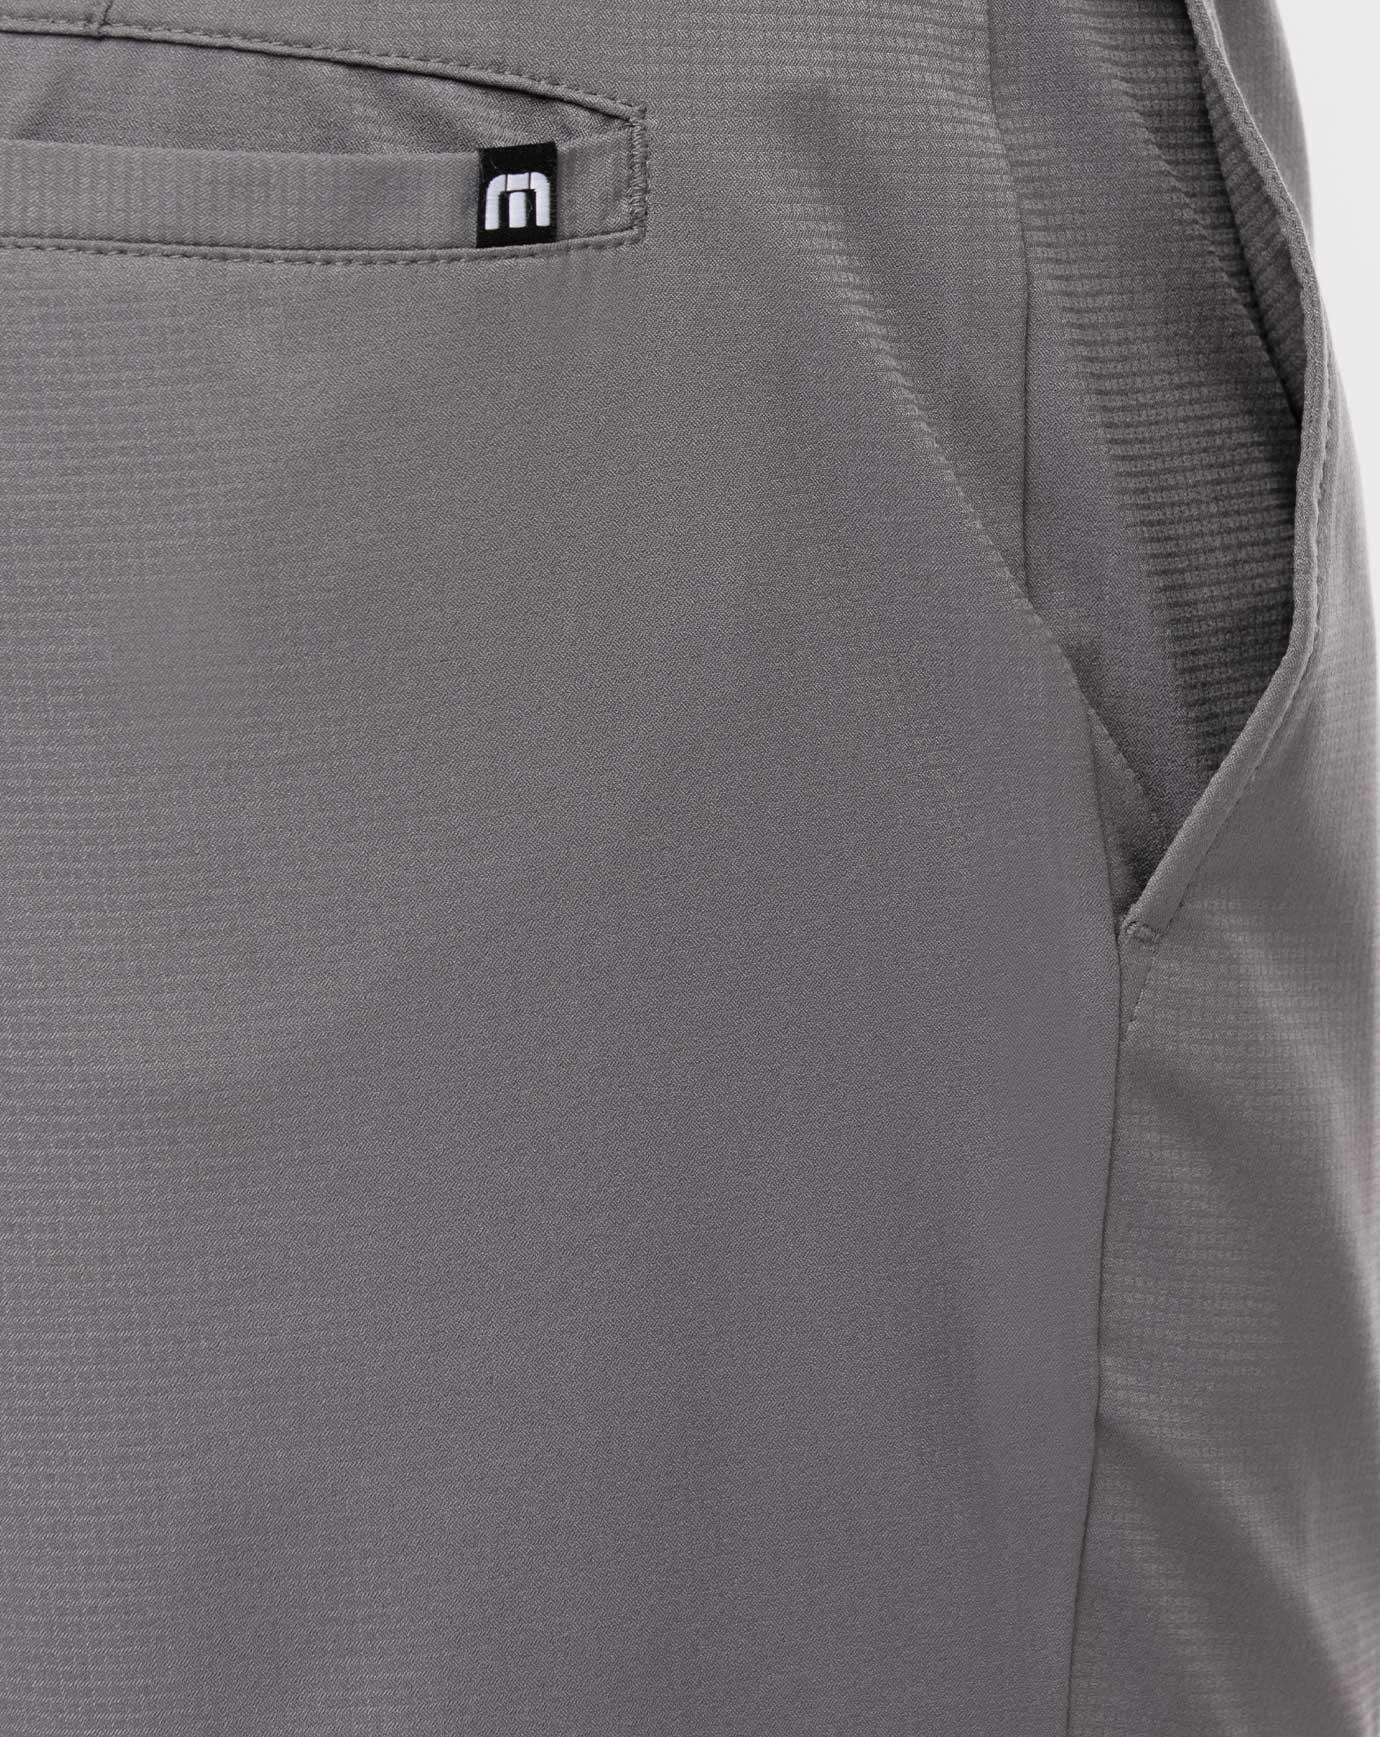 TravisMathew Men's Clothing & Golf Apparel | Official Store